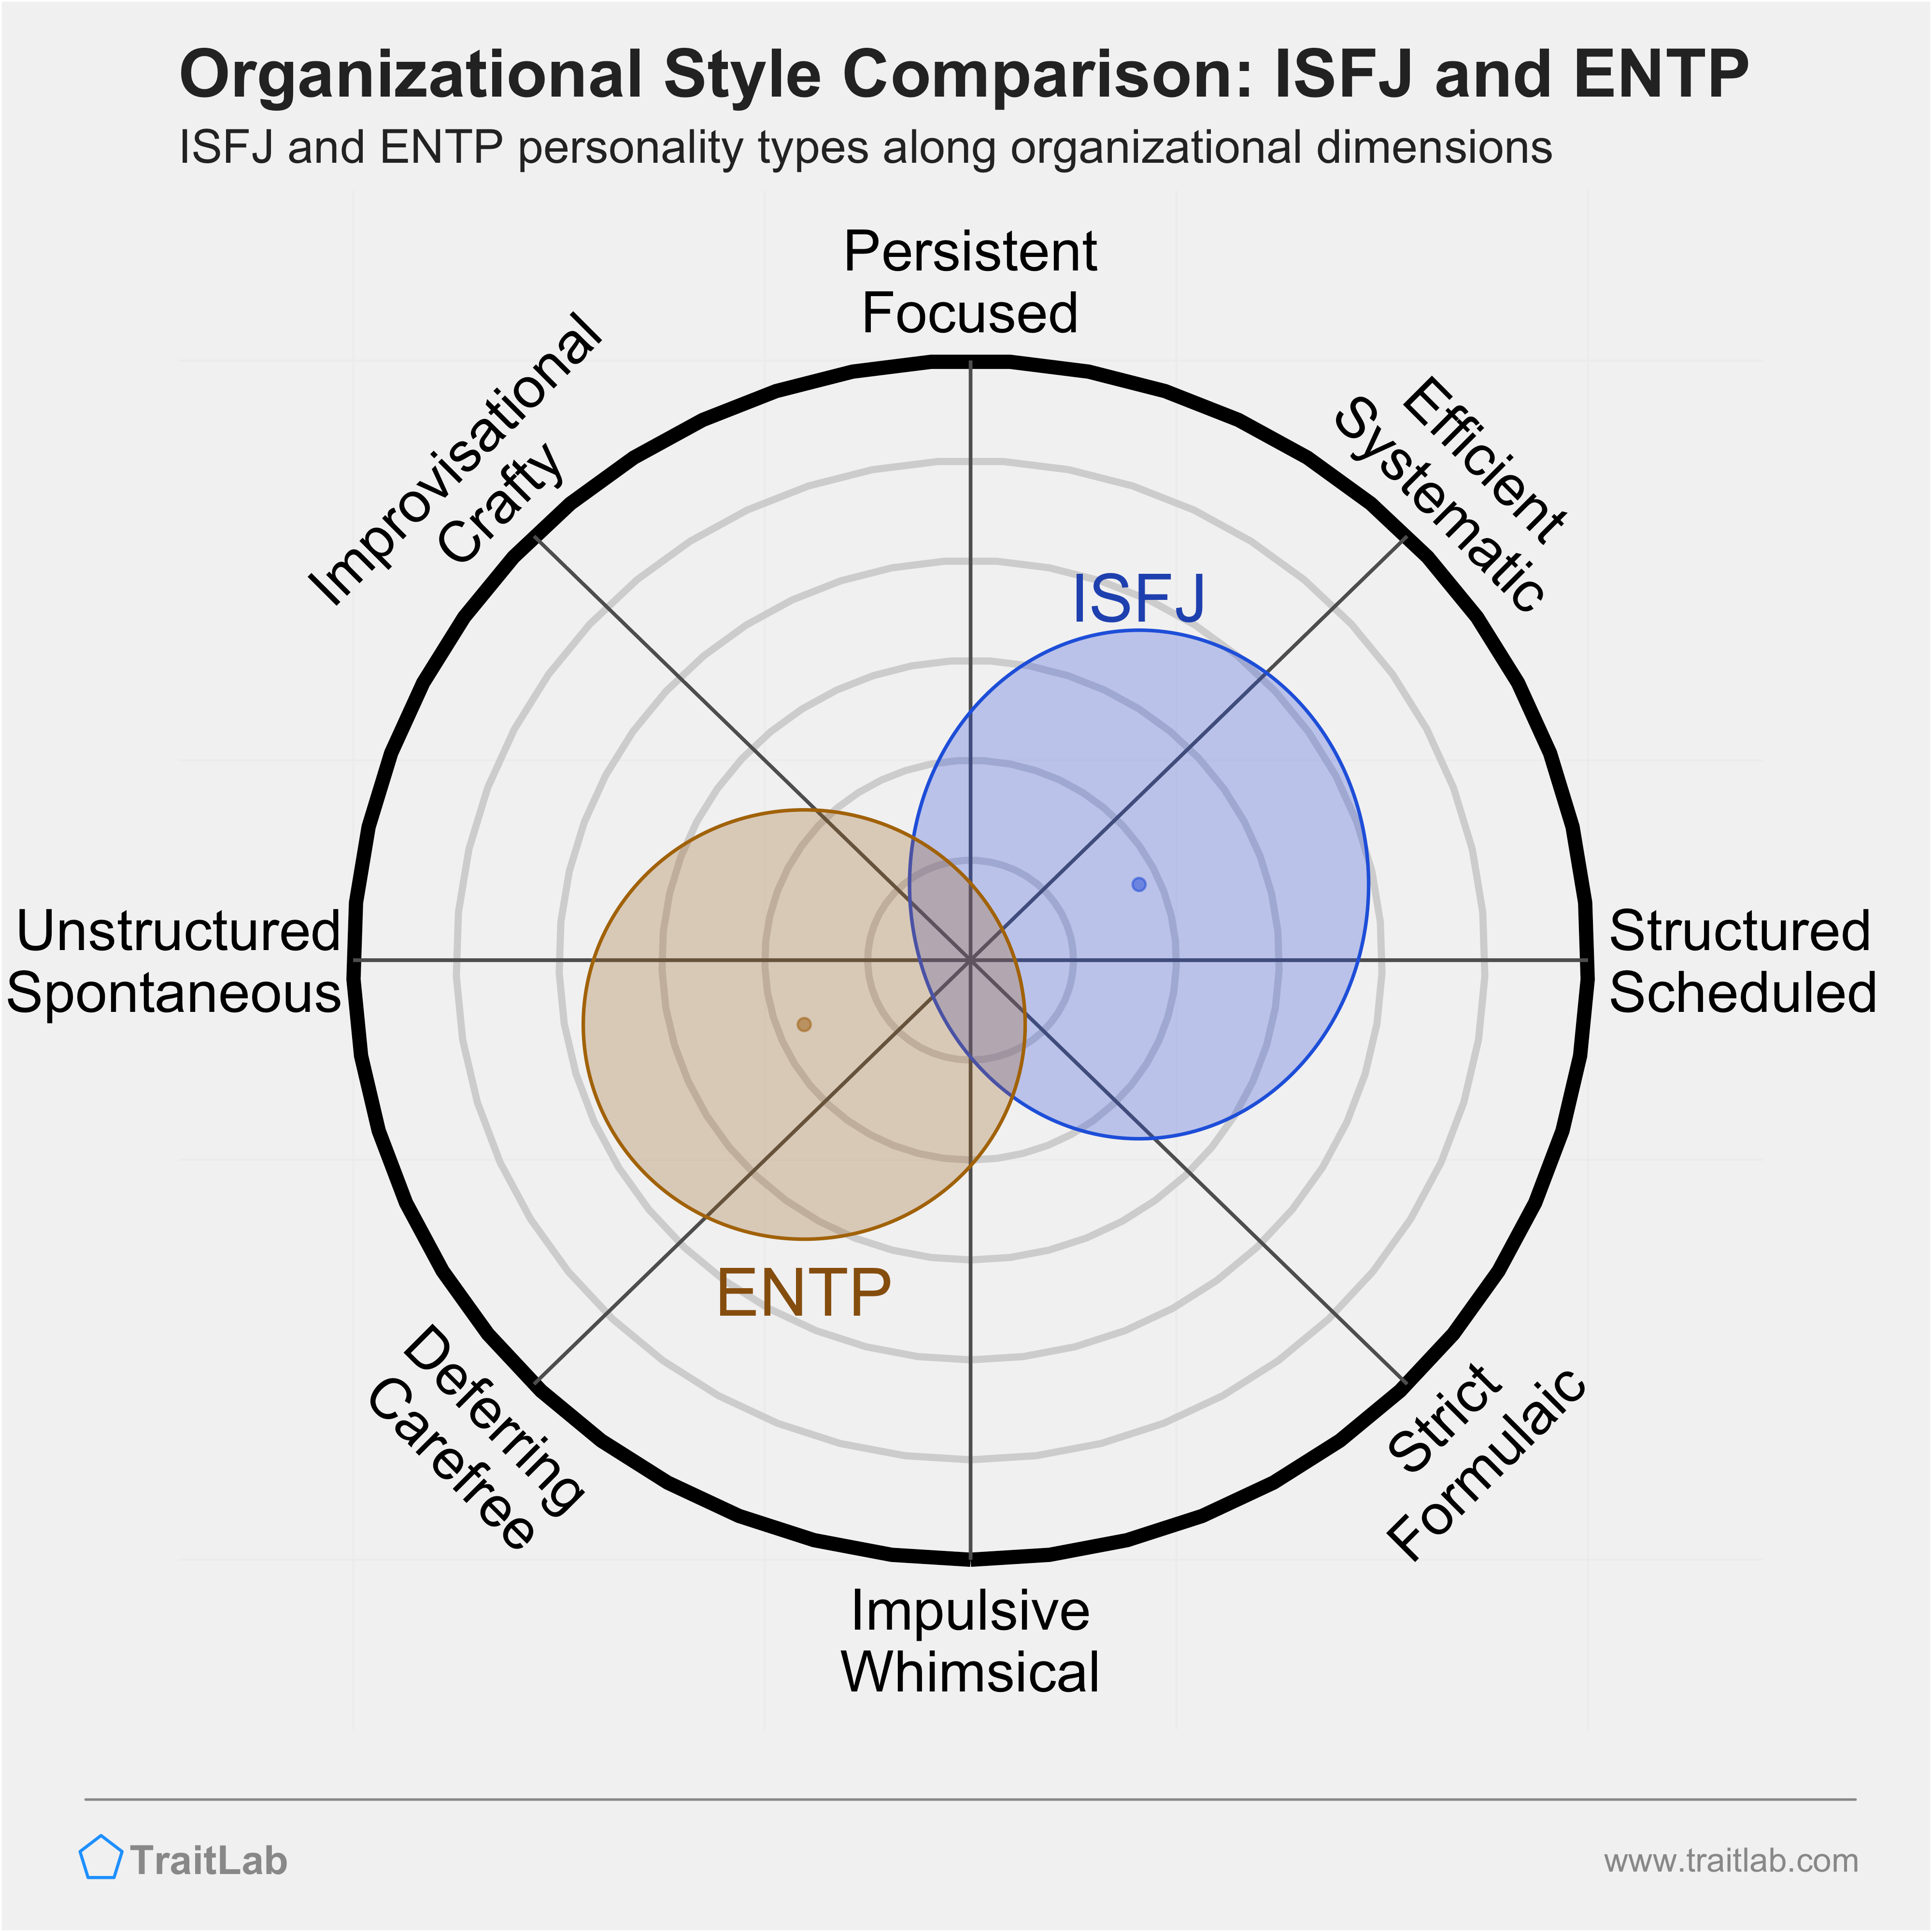 ISFJ and ENTP comparison across organizational dimensions